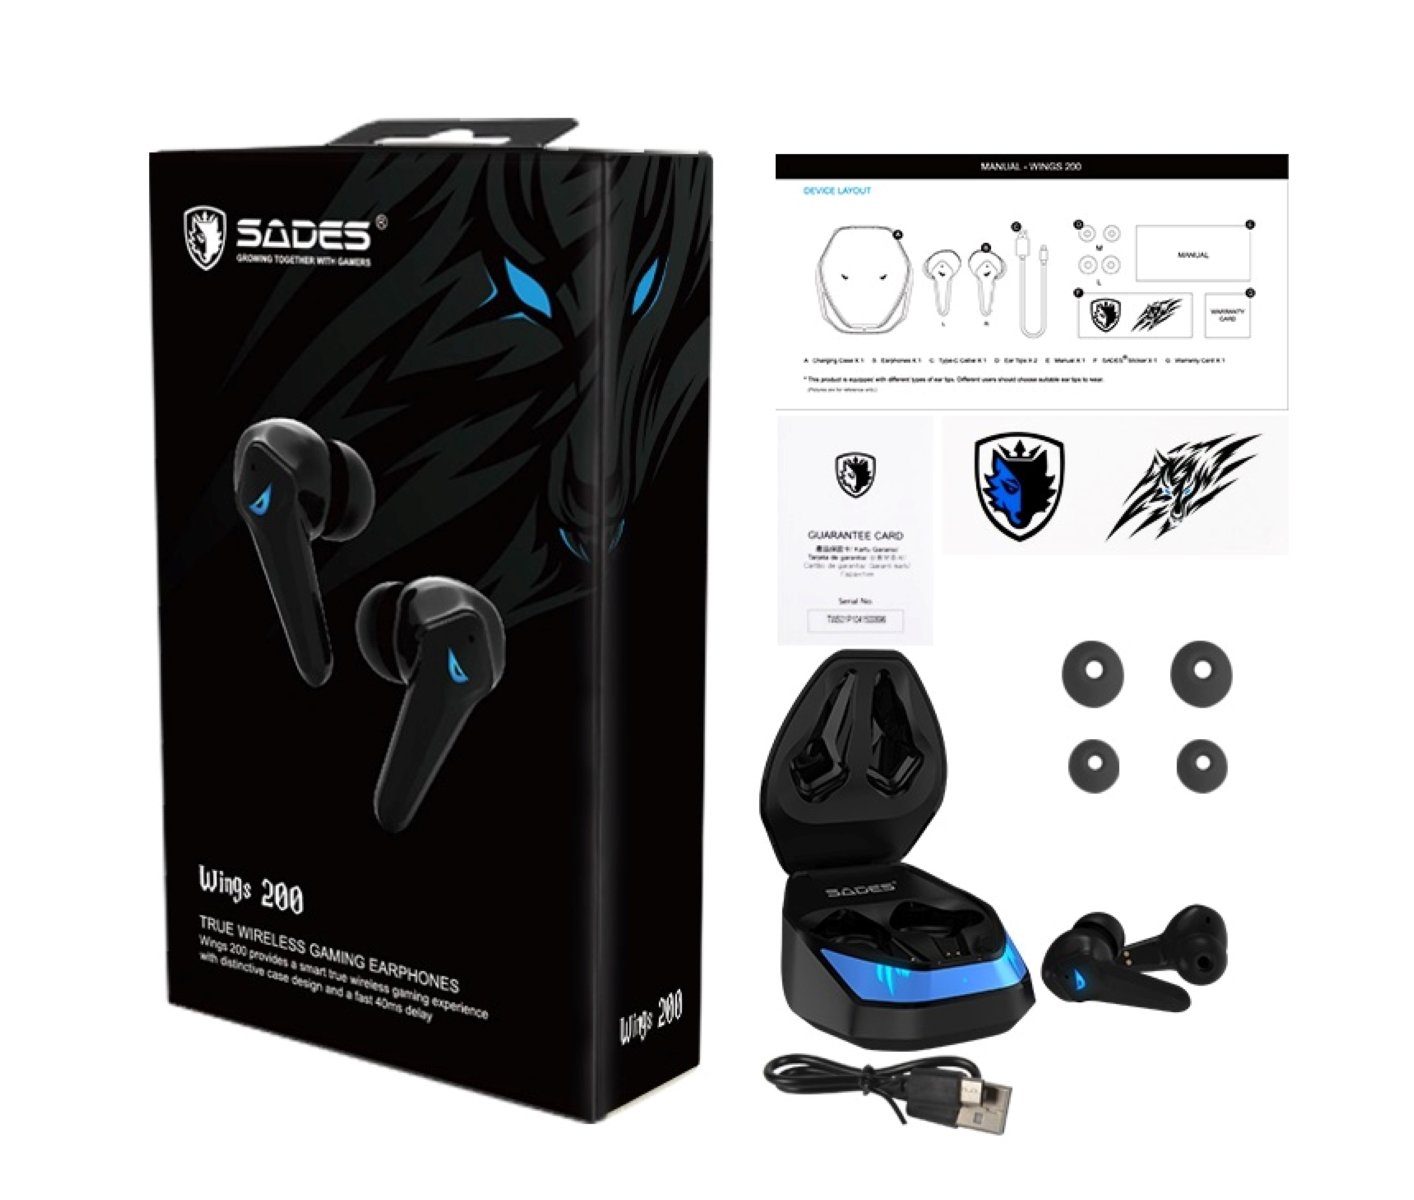 In-Ear-Kopfhörer Mikrofon, automatische TW-S02 Sades 5.0, Stereo, mit (kabellos, Bluetooth Kopplung) Wings 200